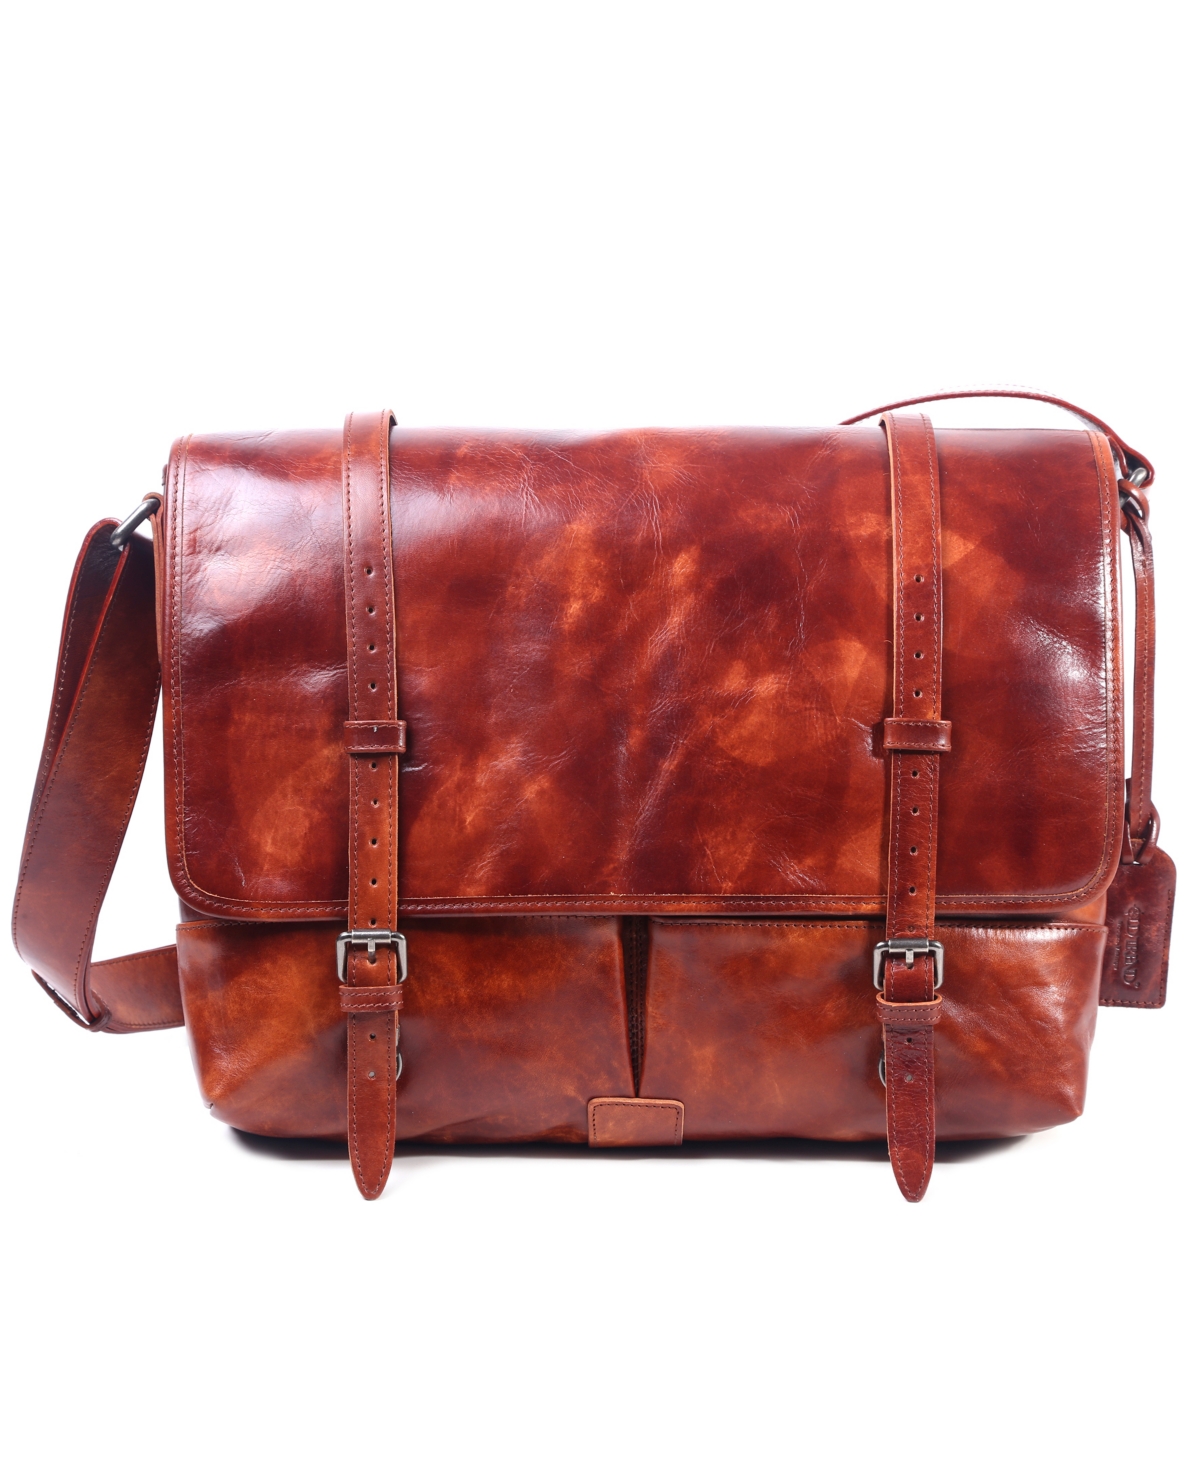 Speedwell Leather Messenger Bag - Chestnut